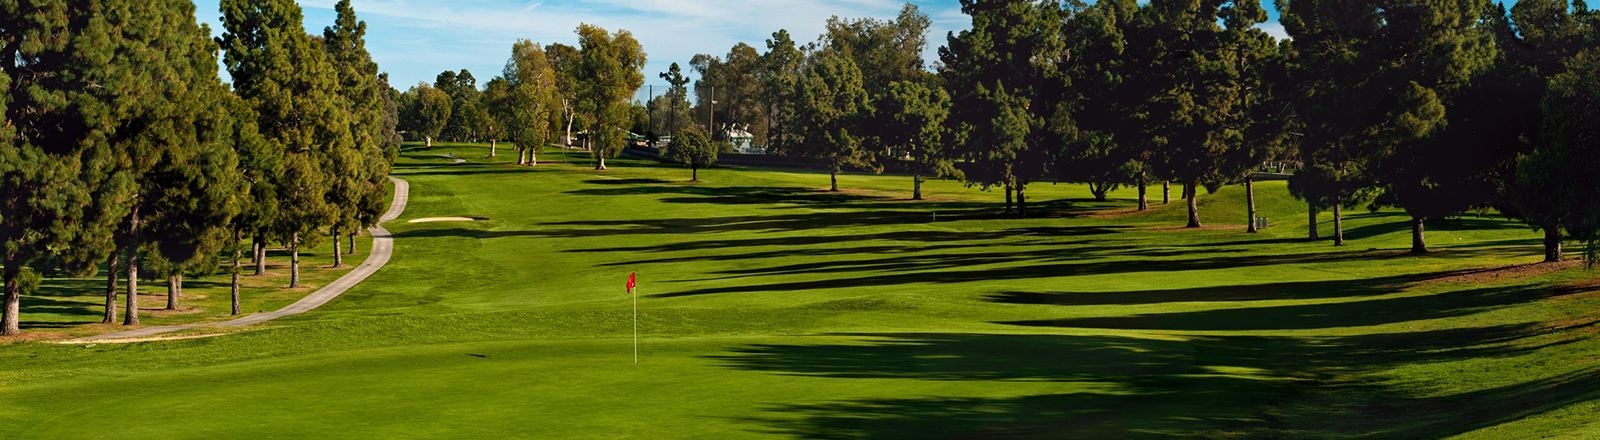 Recreation Park Golf Course 18 Header